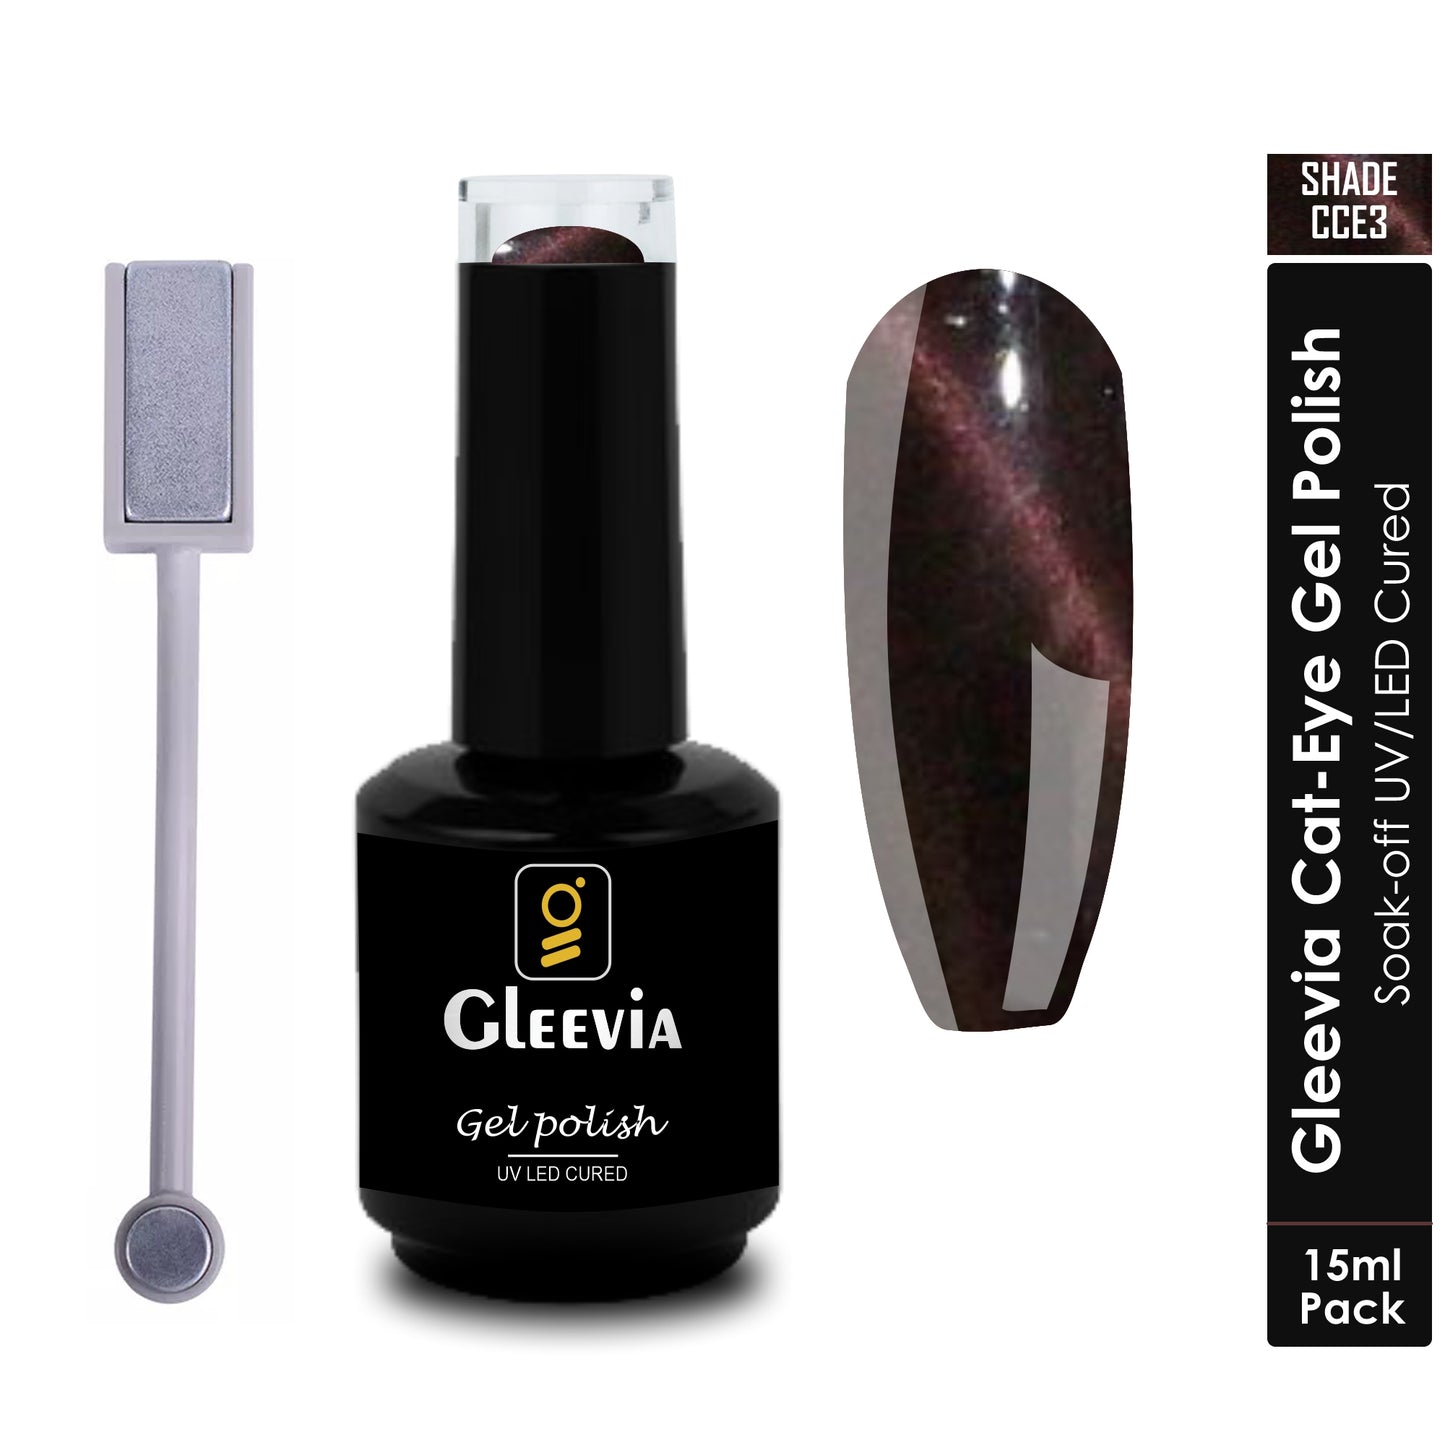 Gleevia Cat-Eye UV Gel Nail Polish 15ml Brush Bottle with Double Head Magnet Combo Shade CCE3